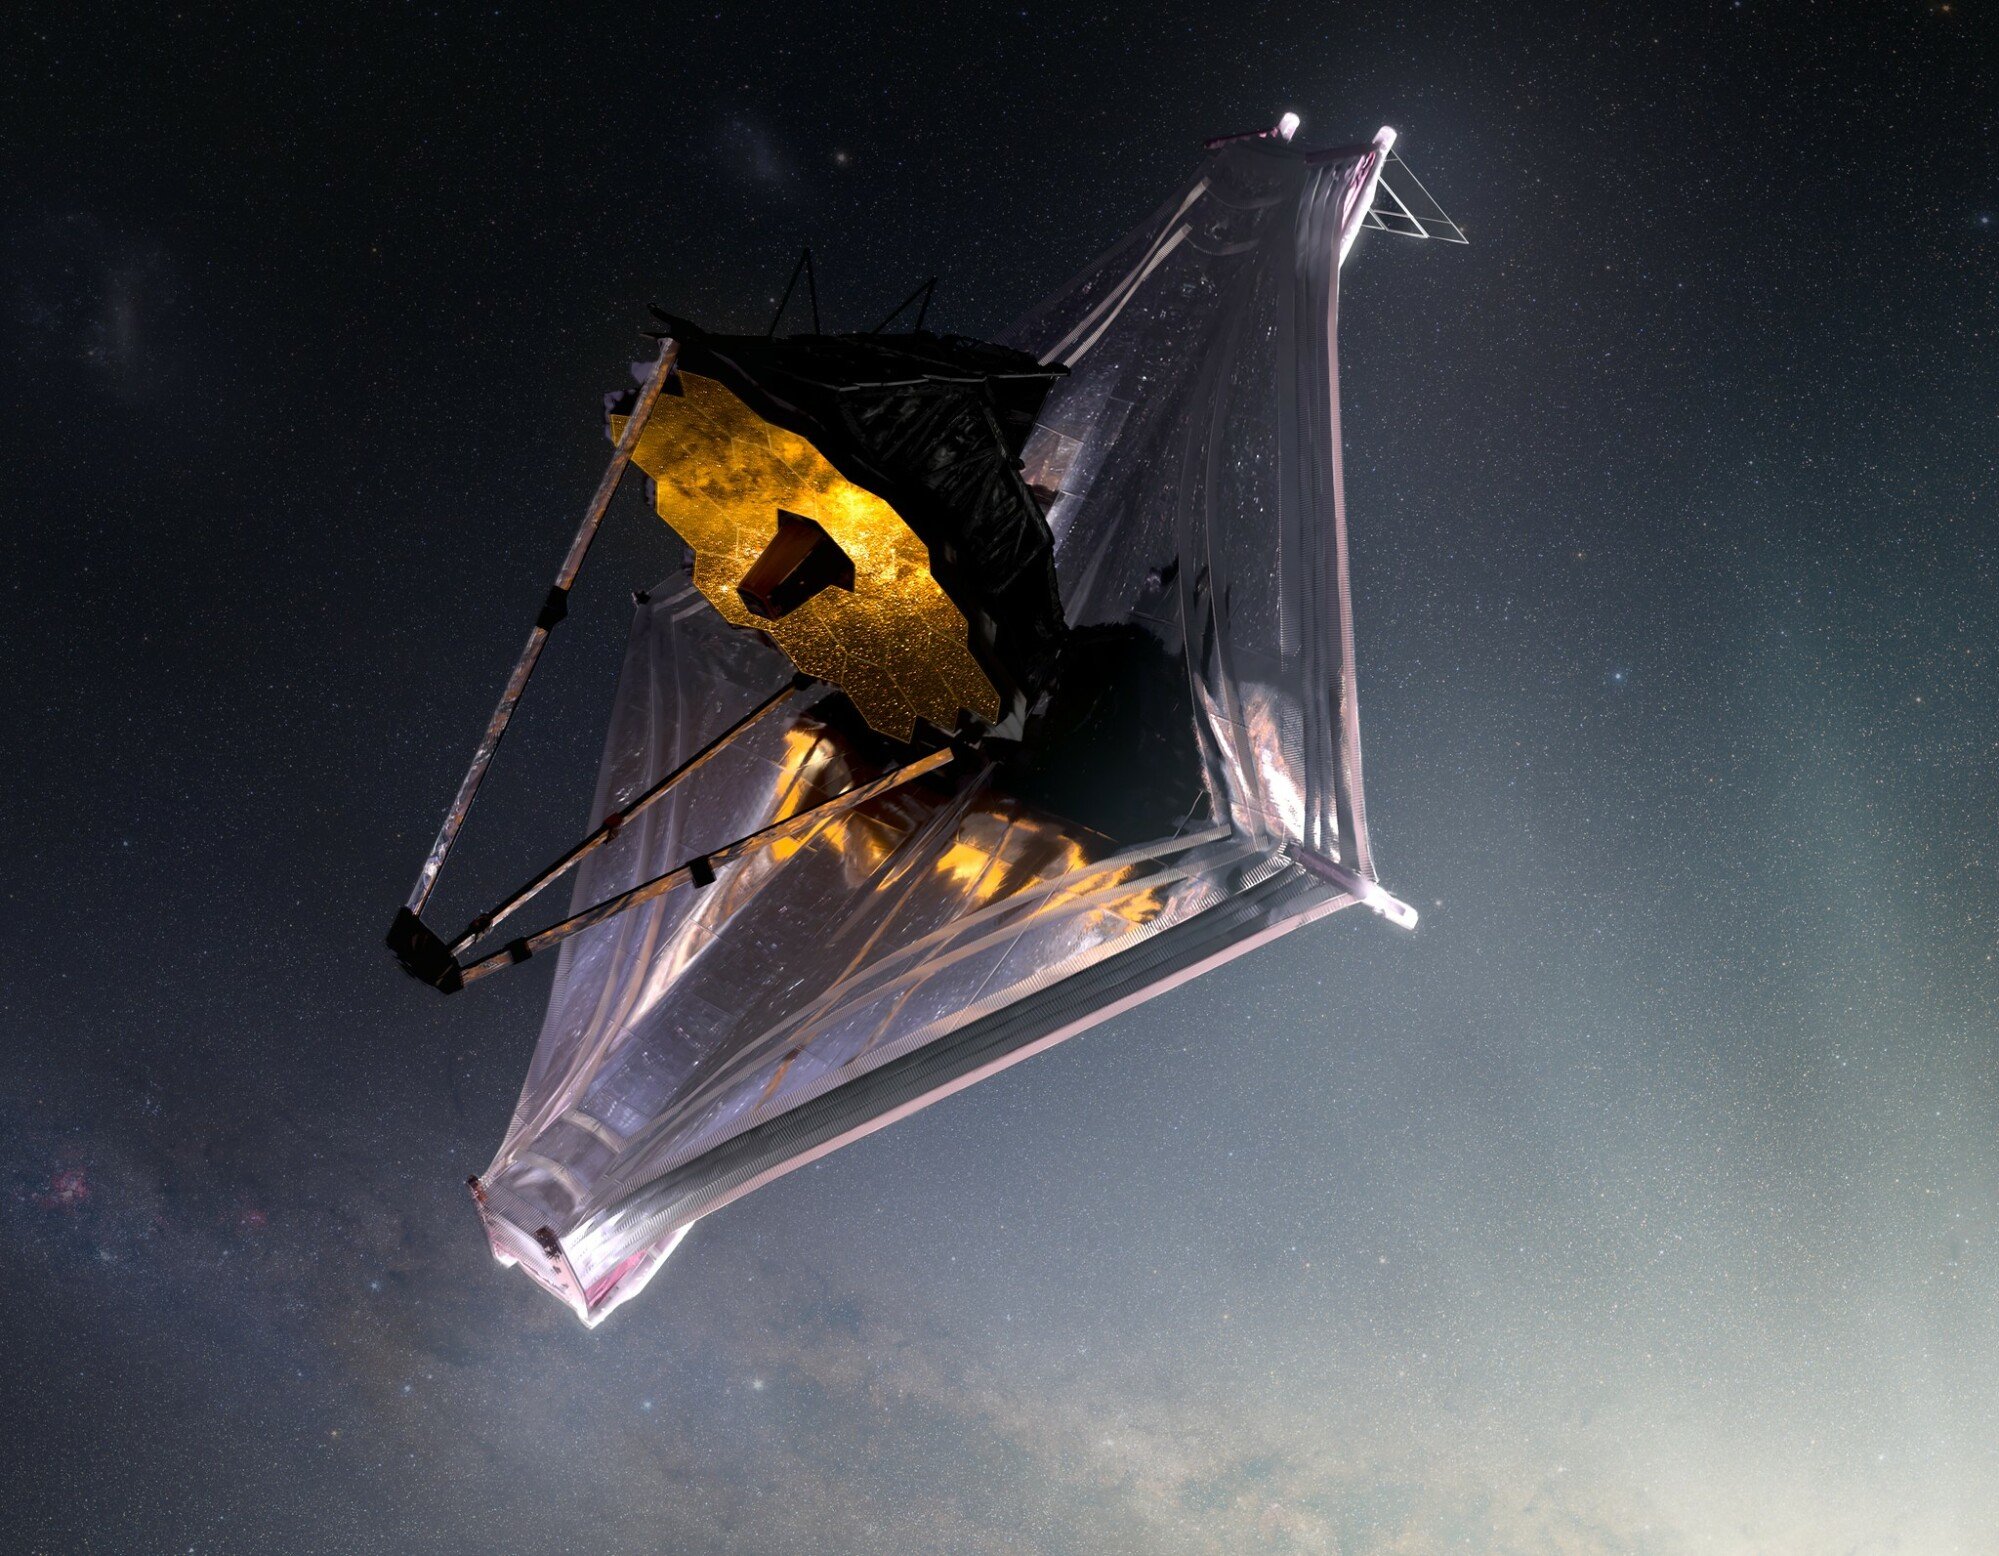 An artist's illustration of the James Webb Space Telescope orbiting the sun 1 million miles from Earth.